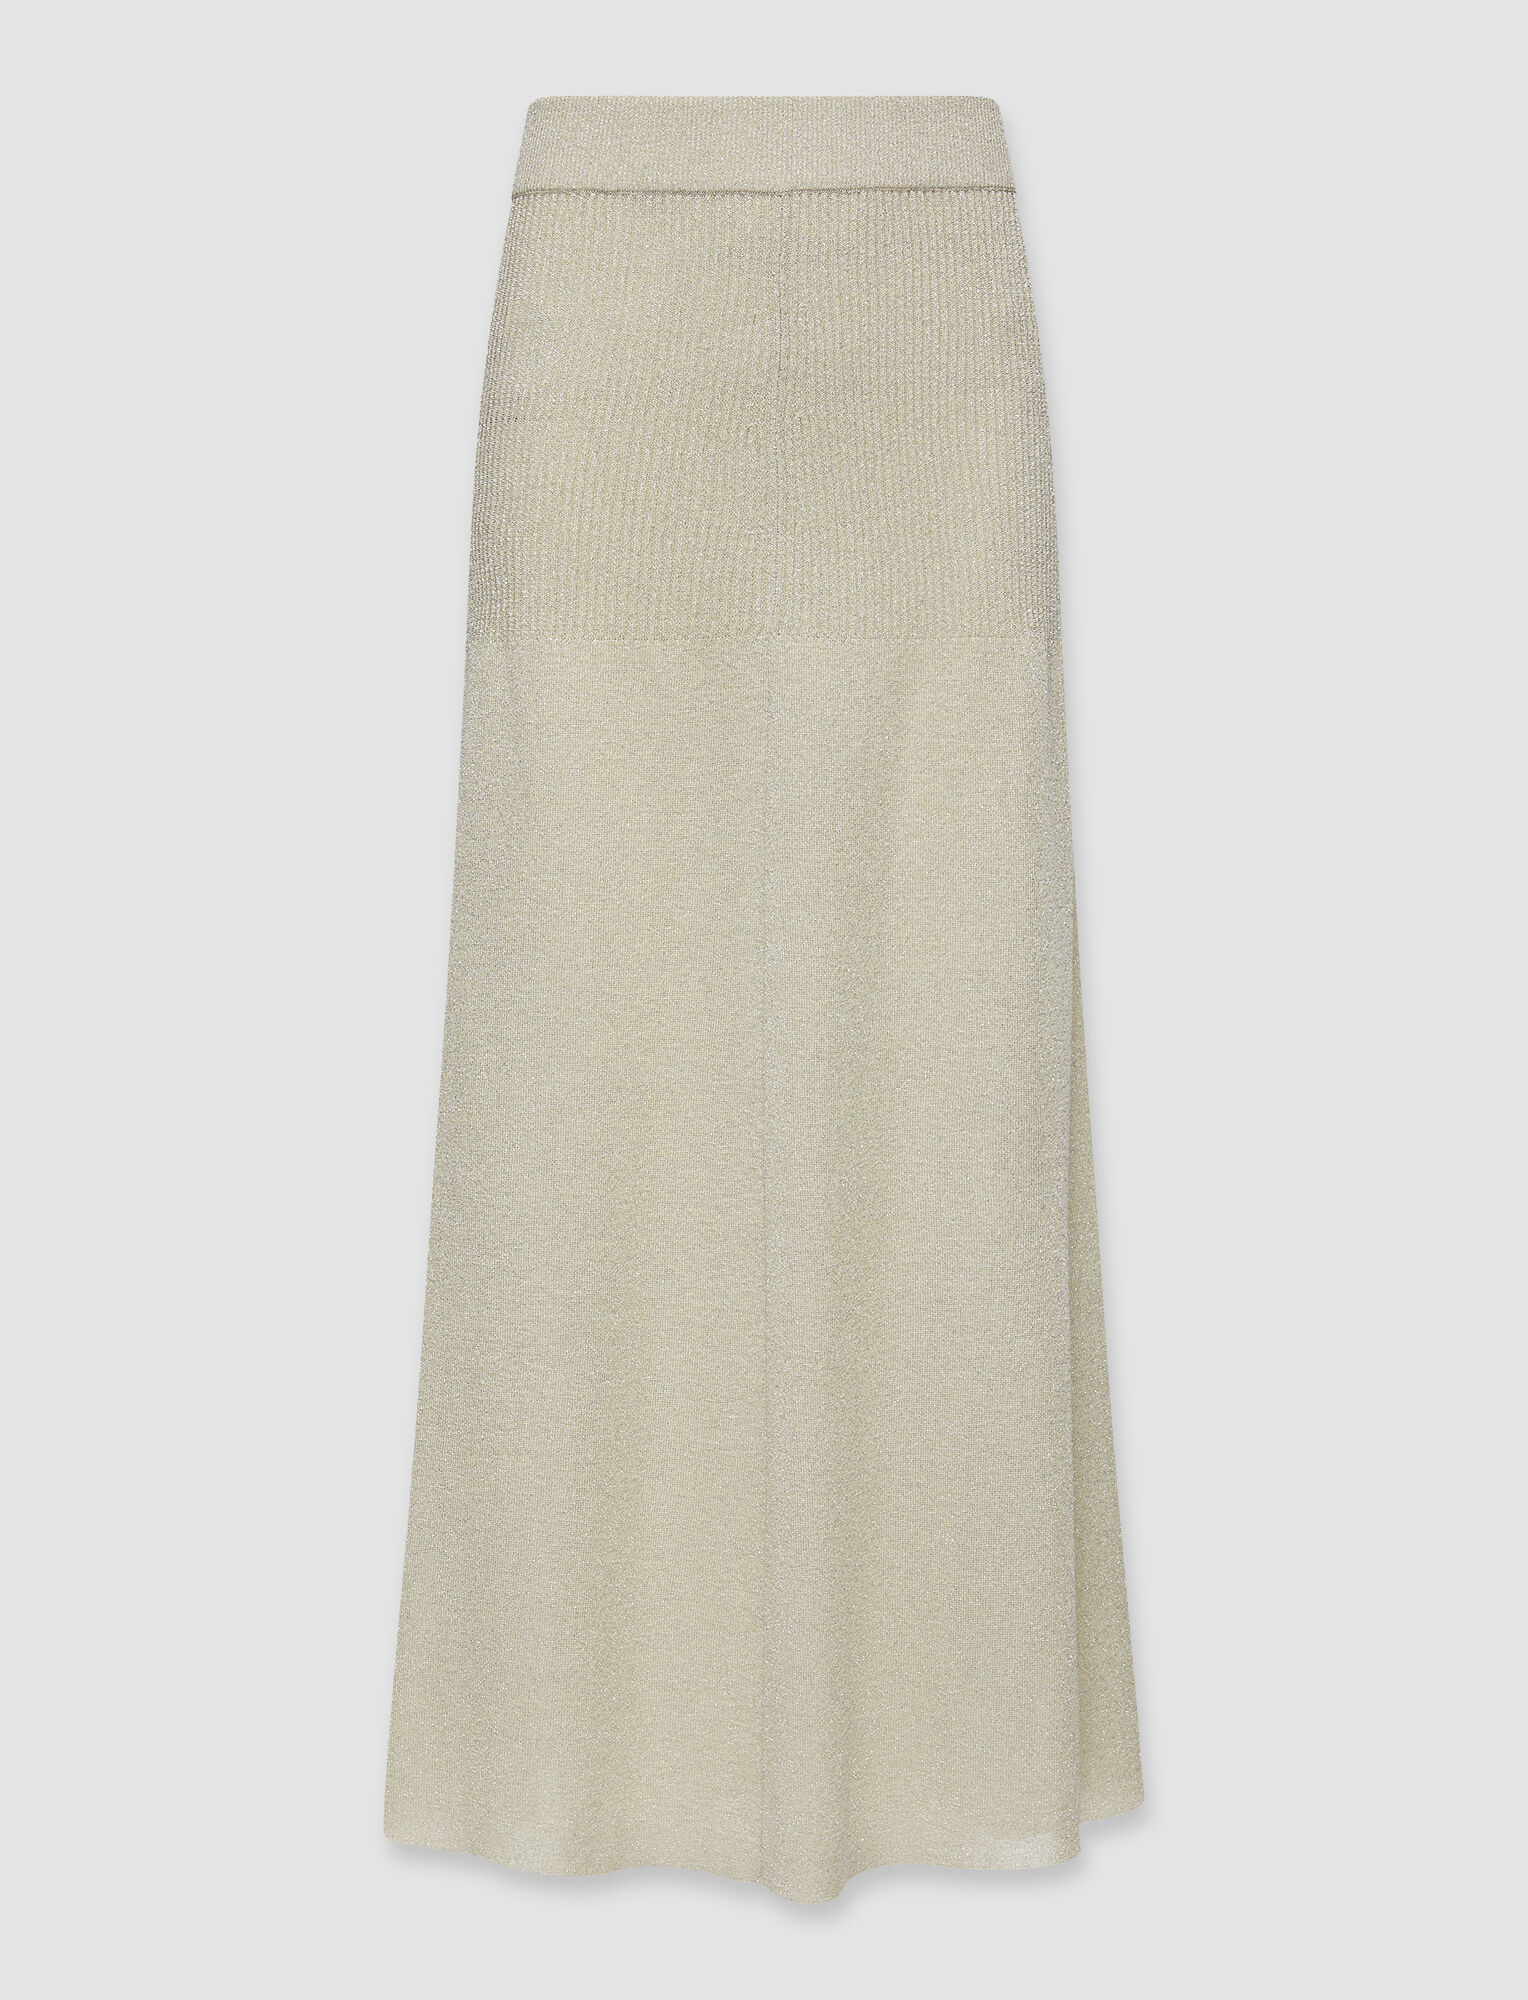 Joseph, Lurex Skirt, in Ivory